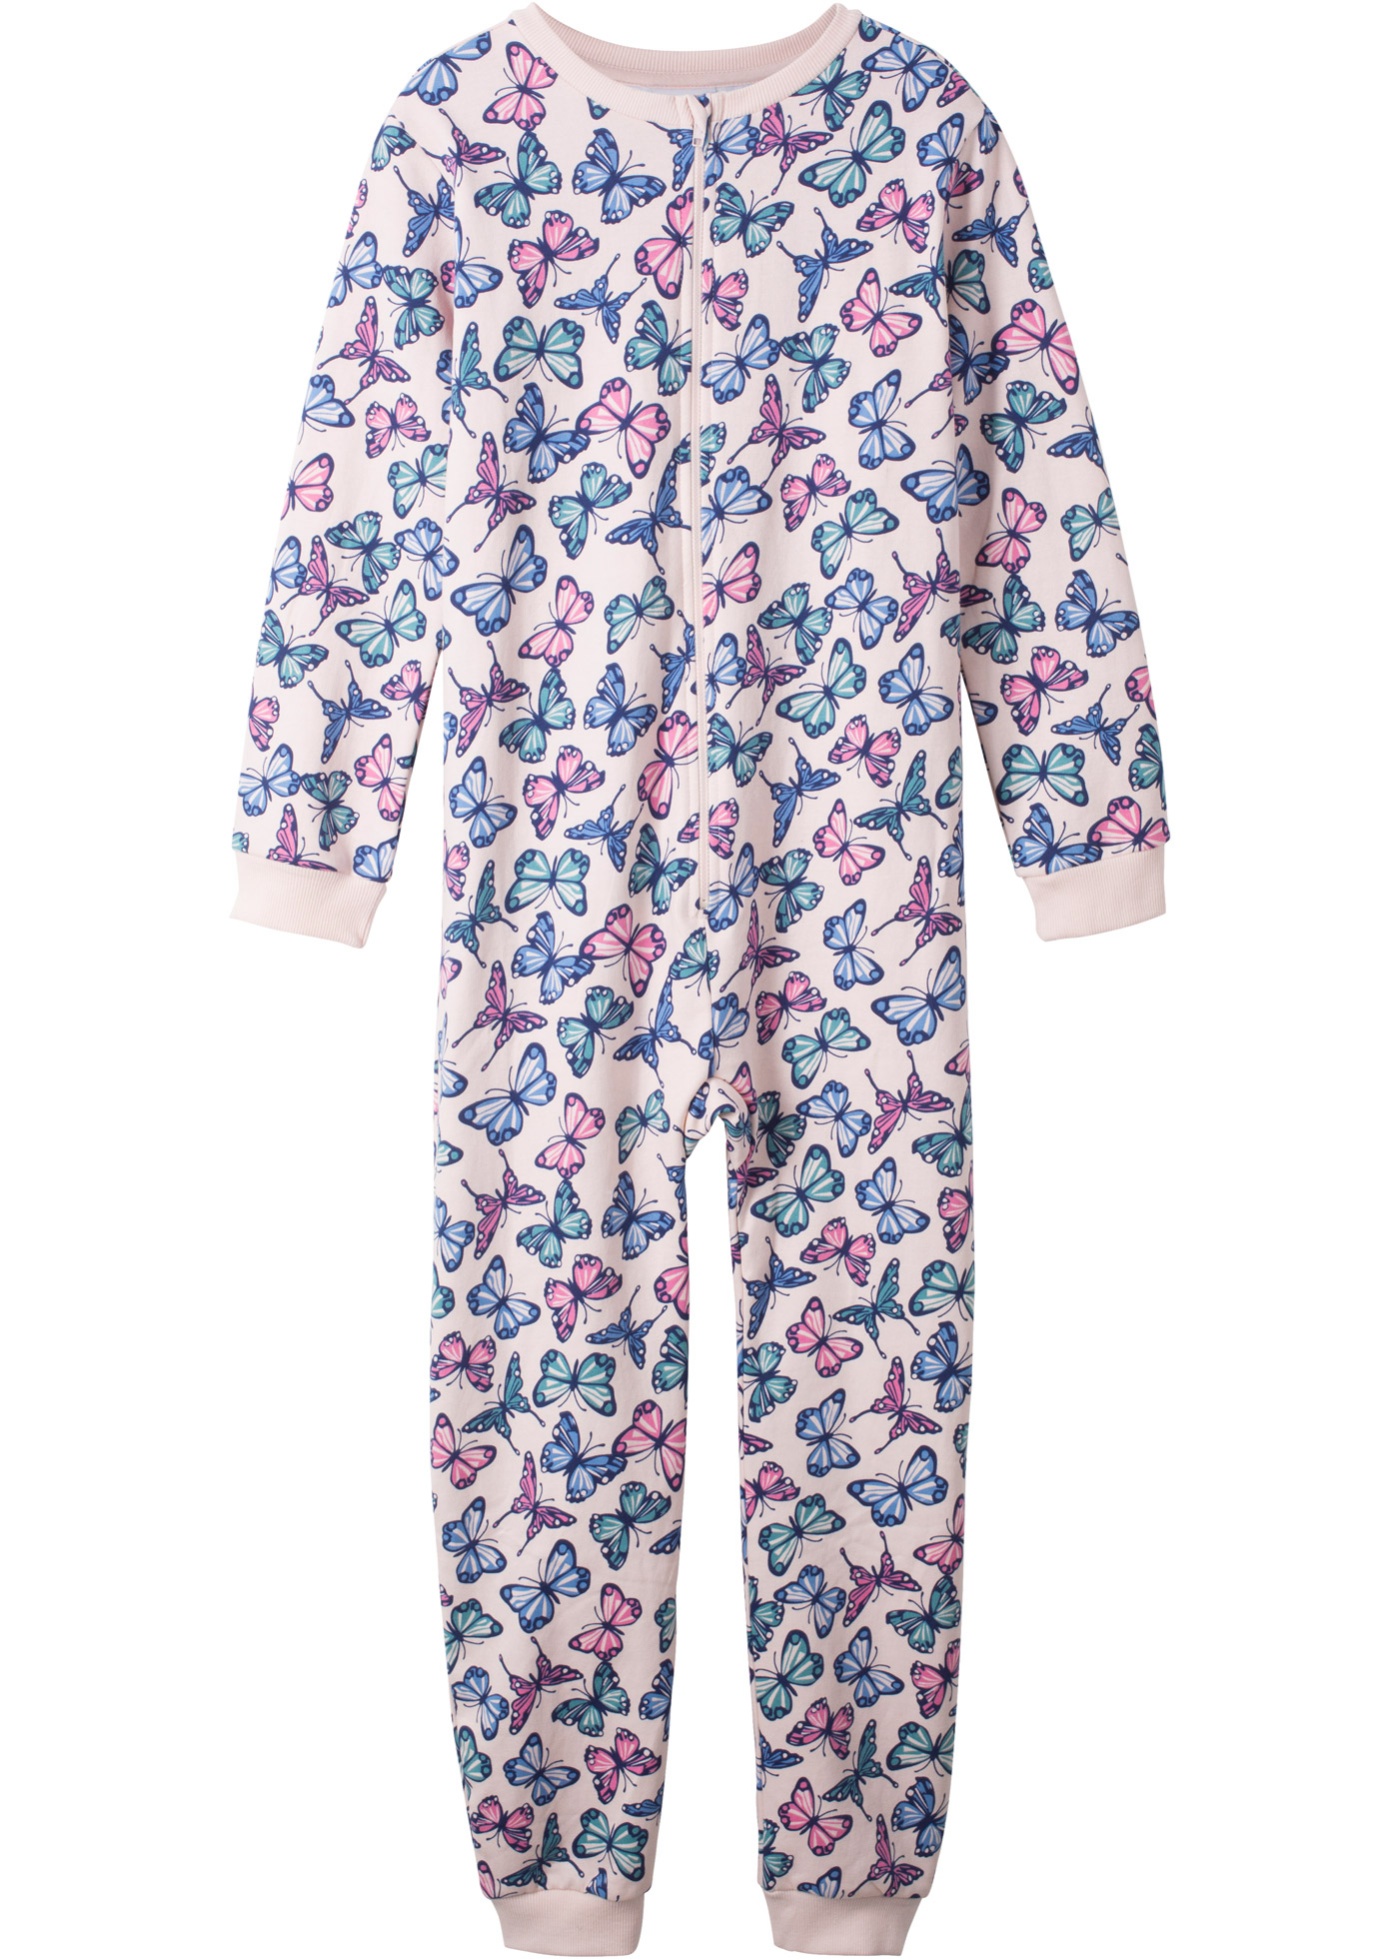 Pyjama onesie